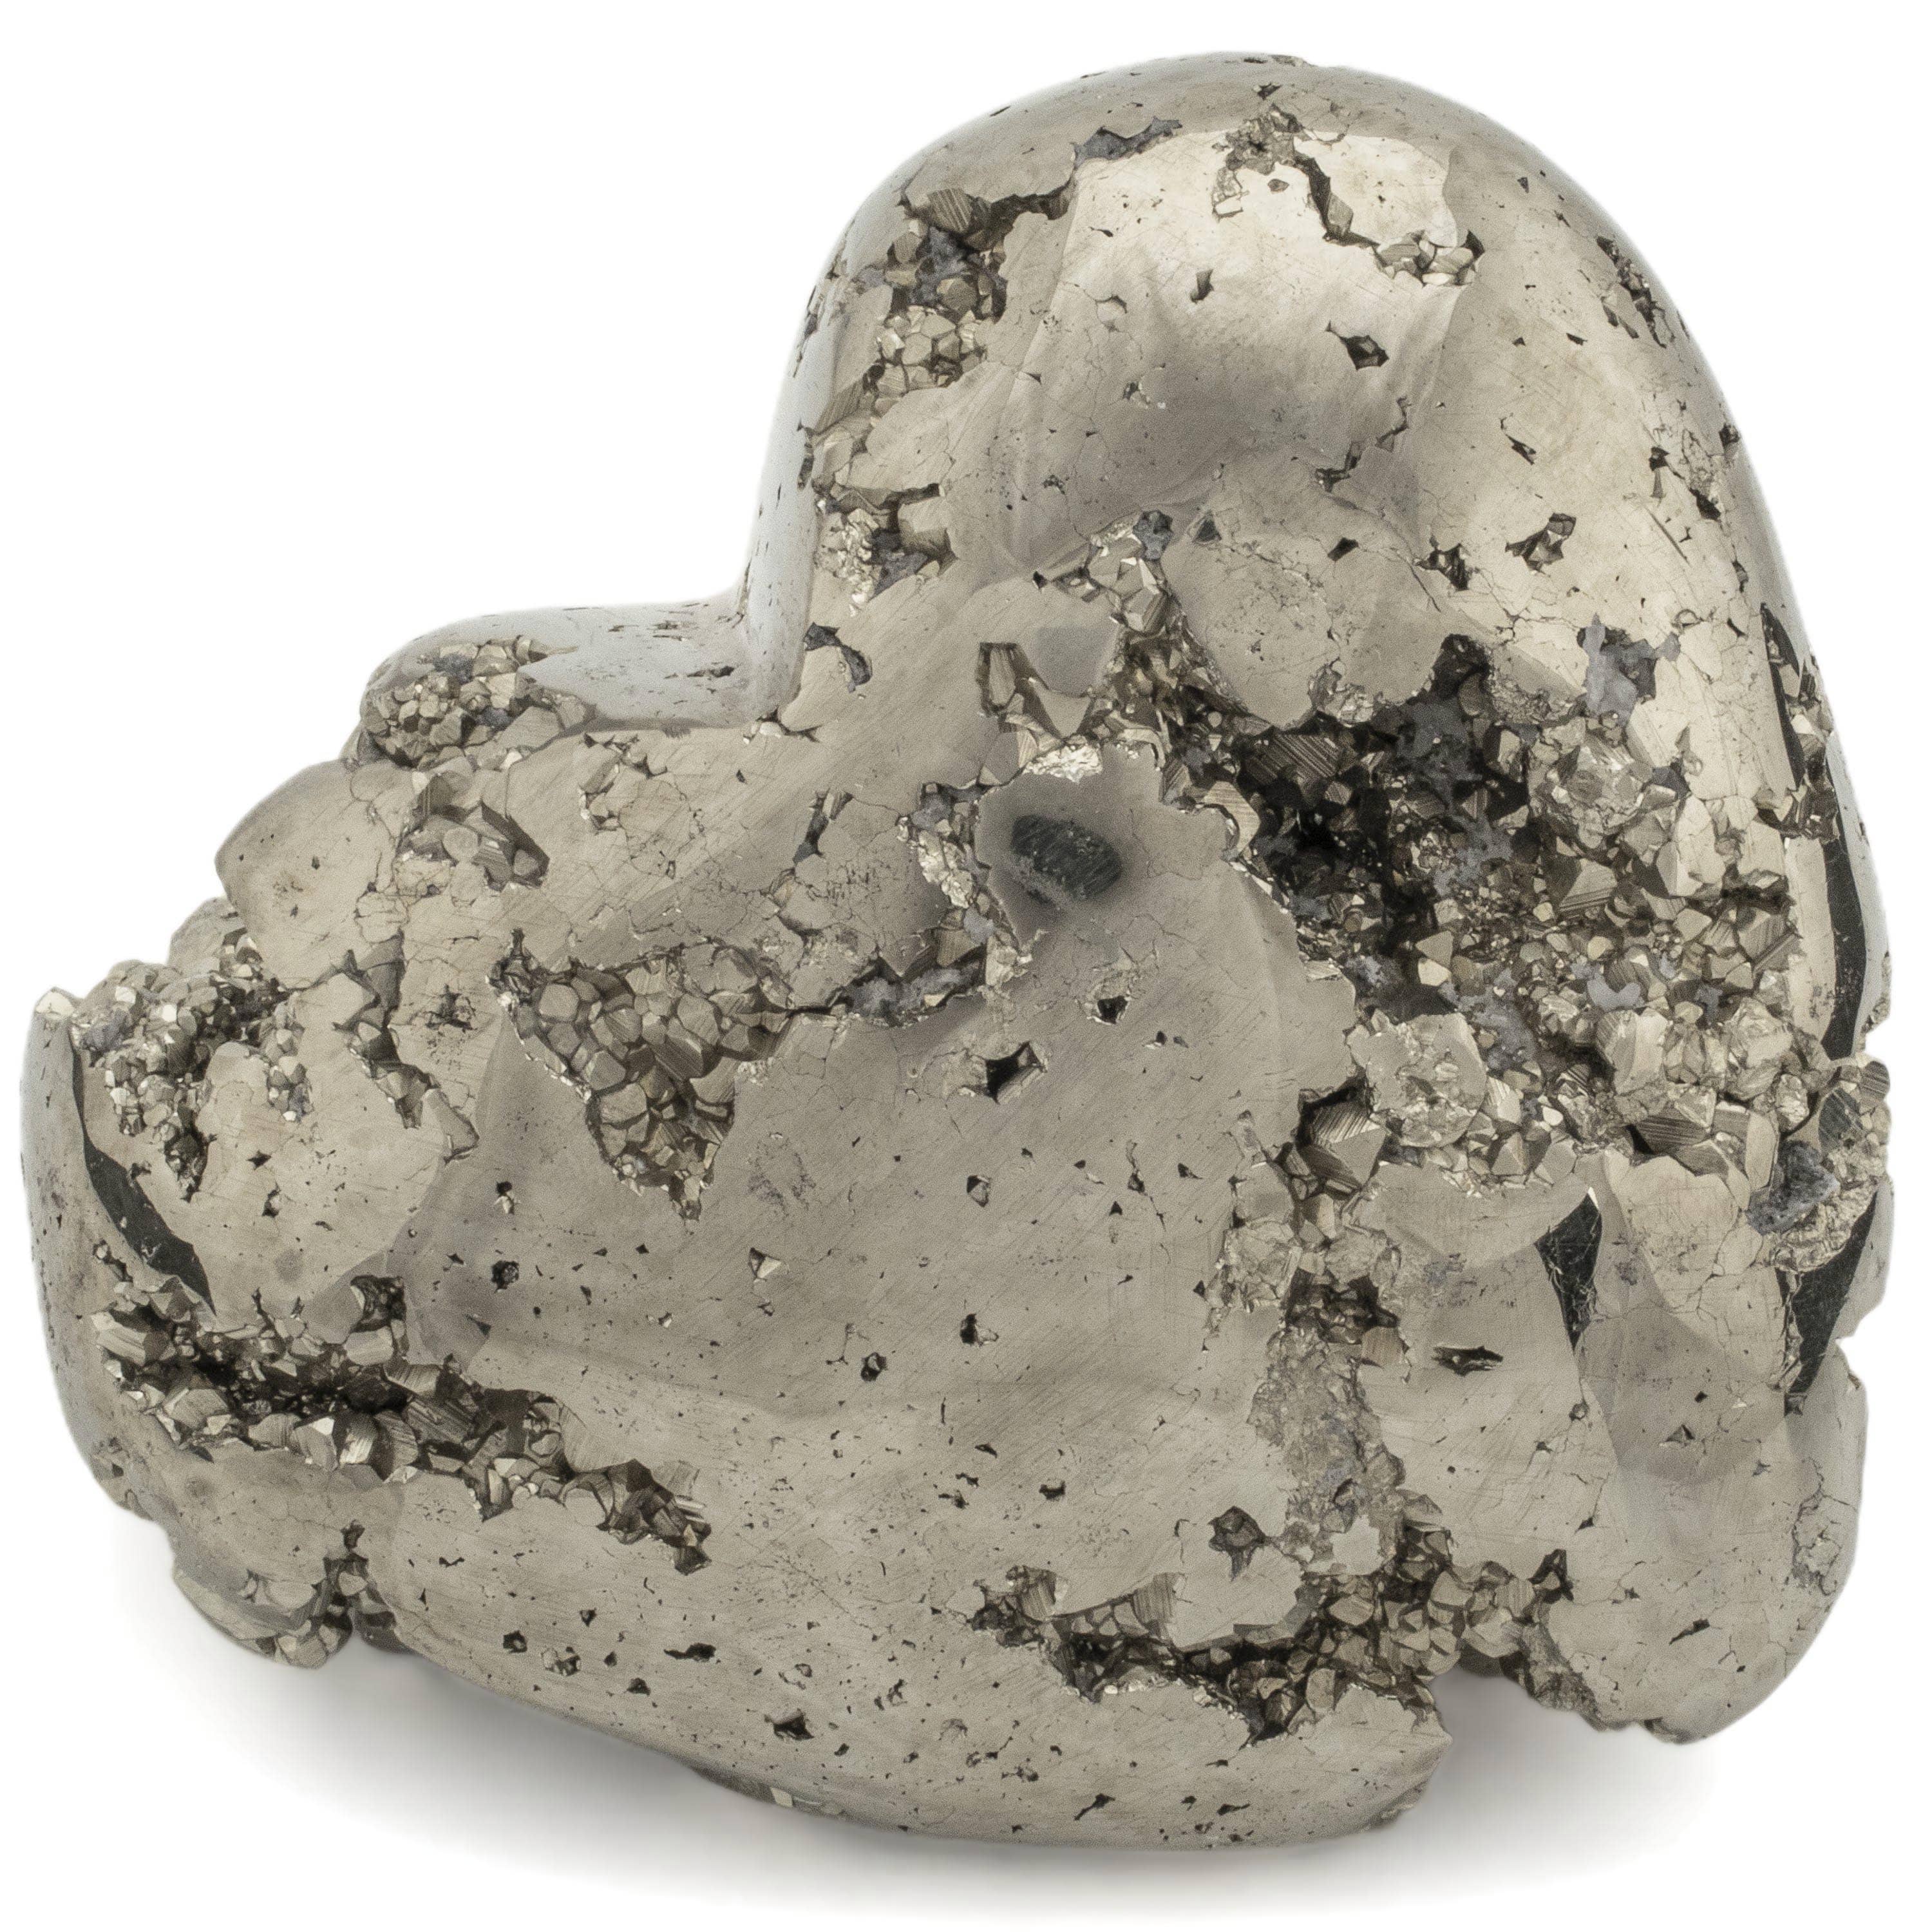 Kalifano Pyrite Pyrite Heart Carving 4.5" / 1,120 grams GH1200-PC.004